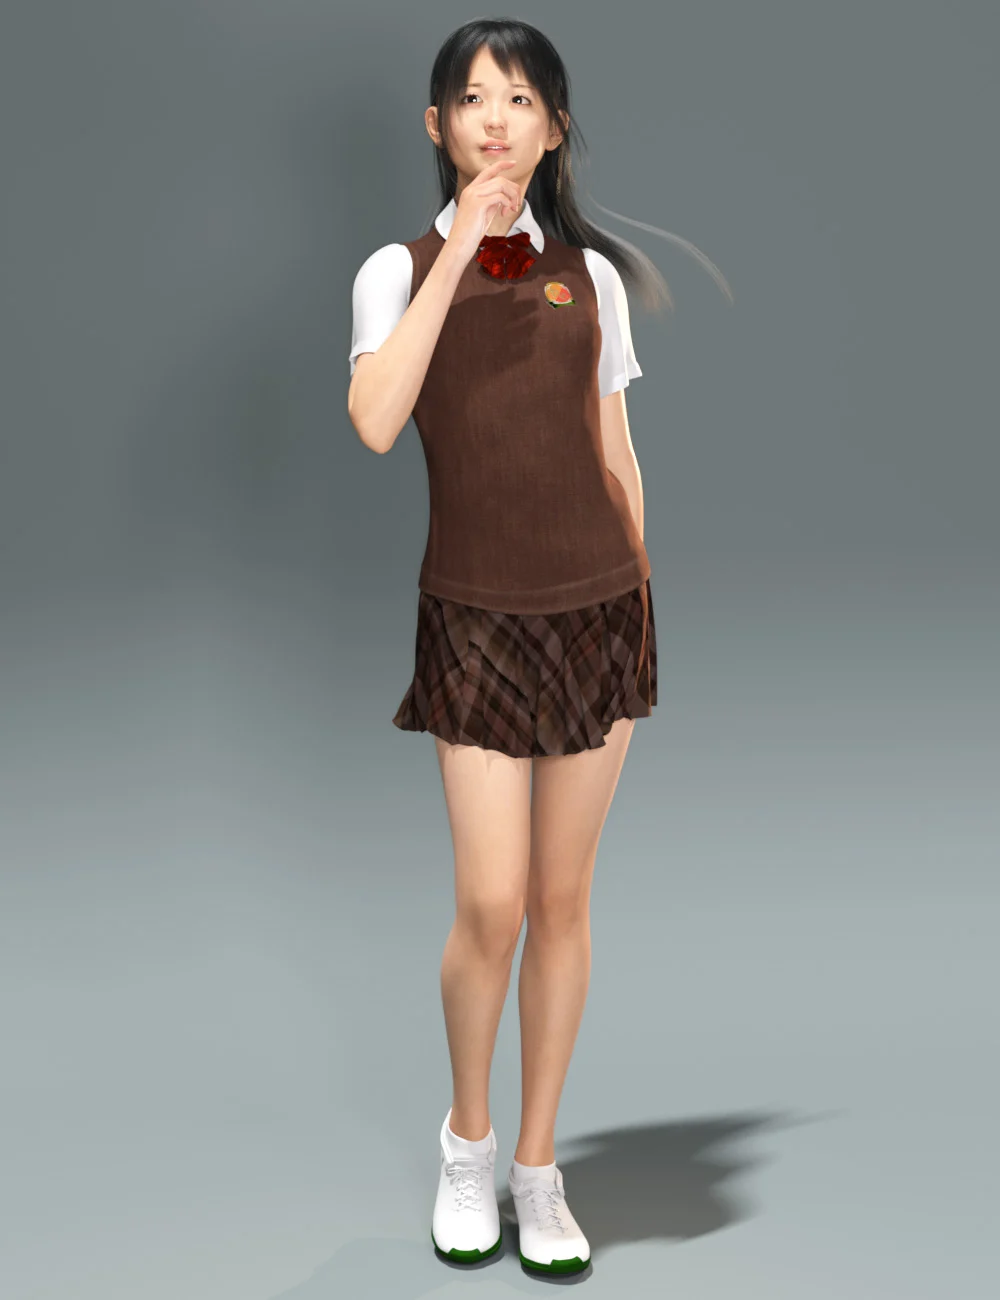 dForce Spring School Uniform for Genesis 8 and 8.1 Females_DAZ3D下载站